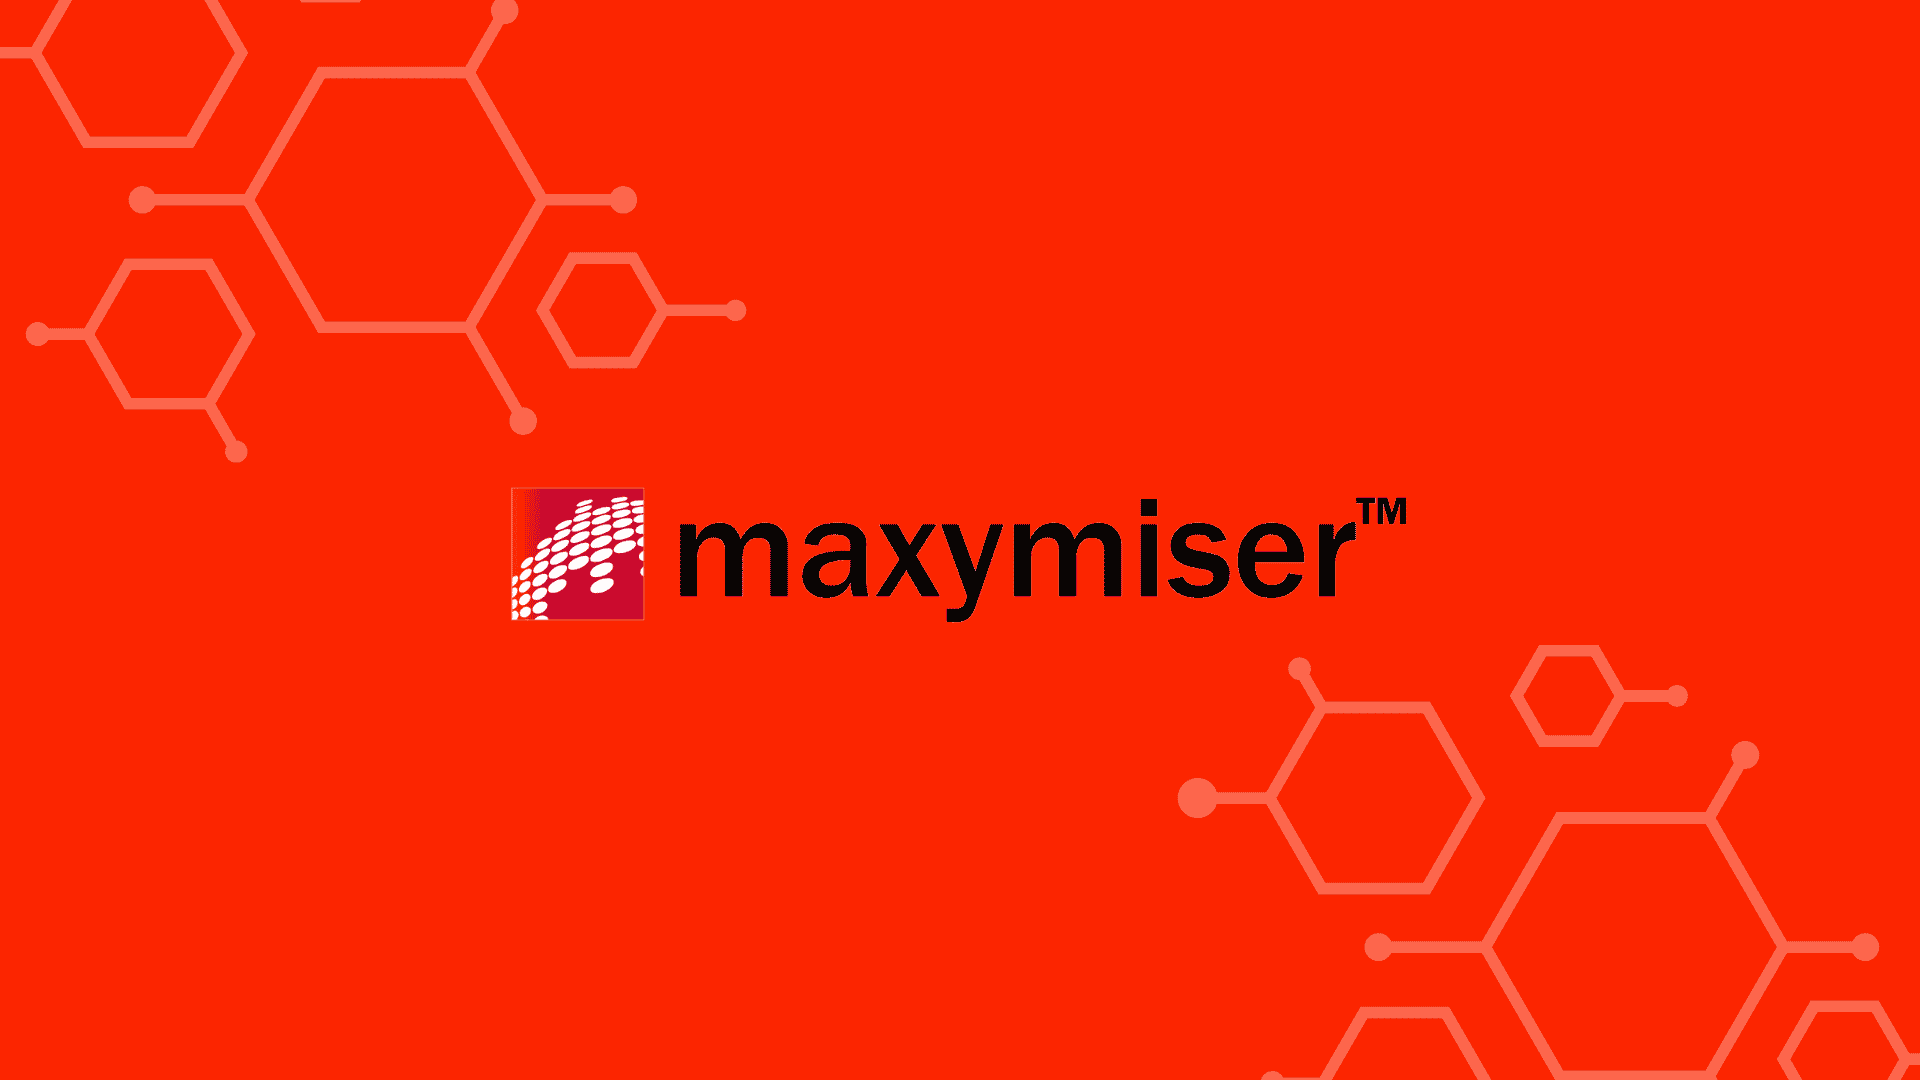 maxymiser logo